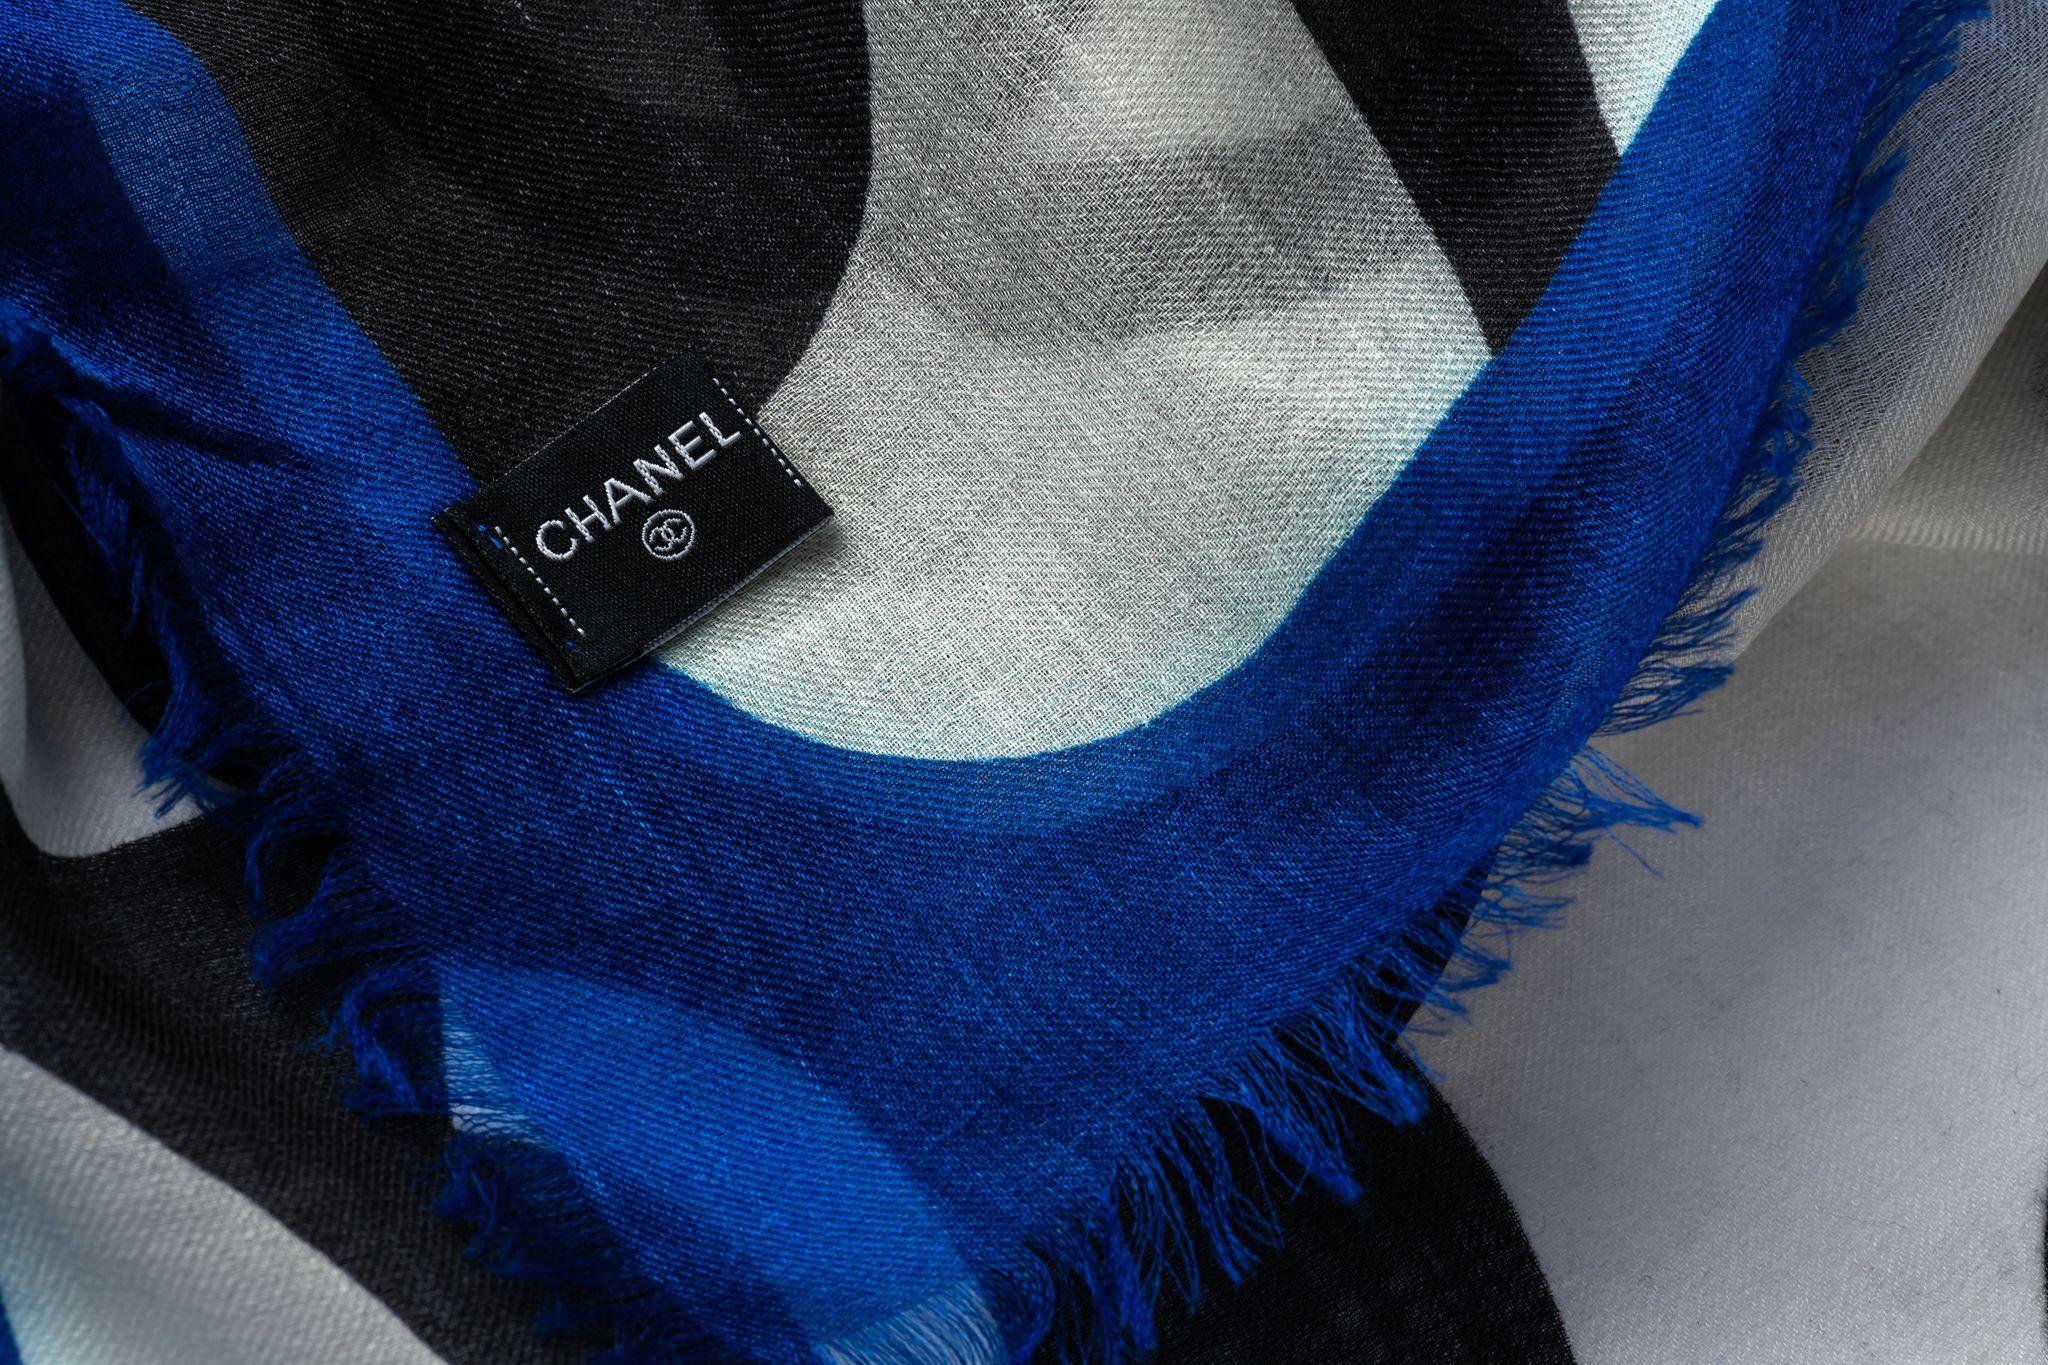 Chanel new logo cashmere shawl in white, black and blue . Original care tag.